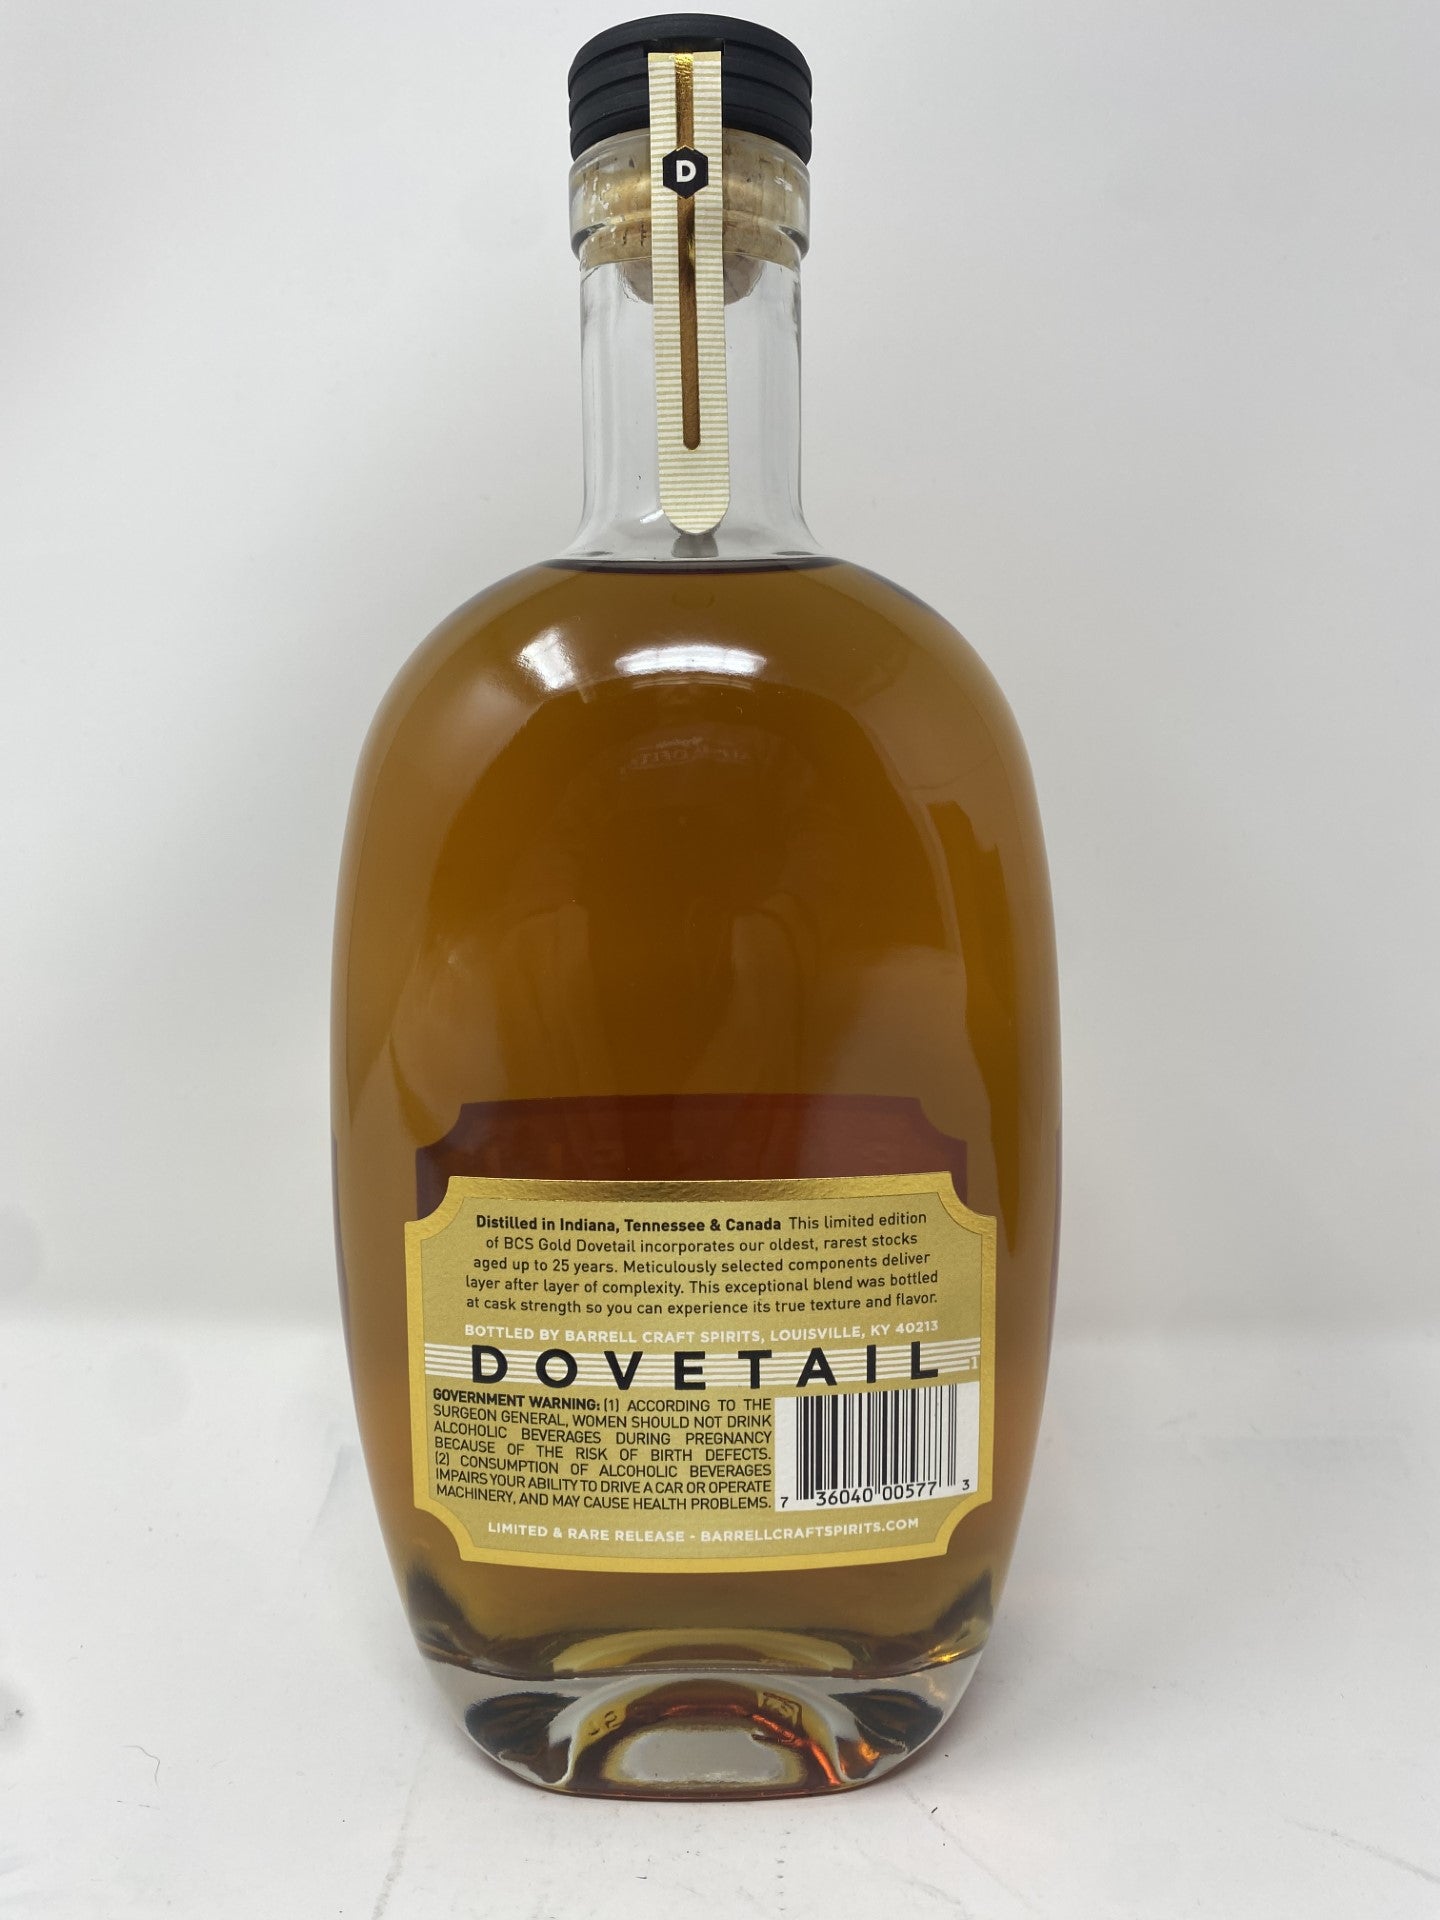 Barrell Craft Spirits Dovetail (Gold Label) Whiskey